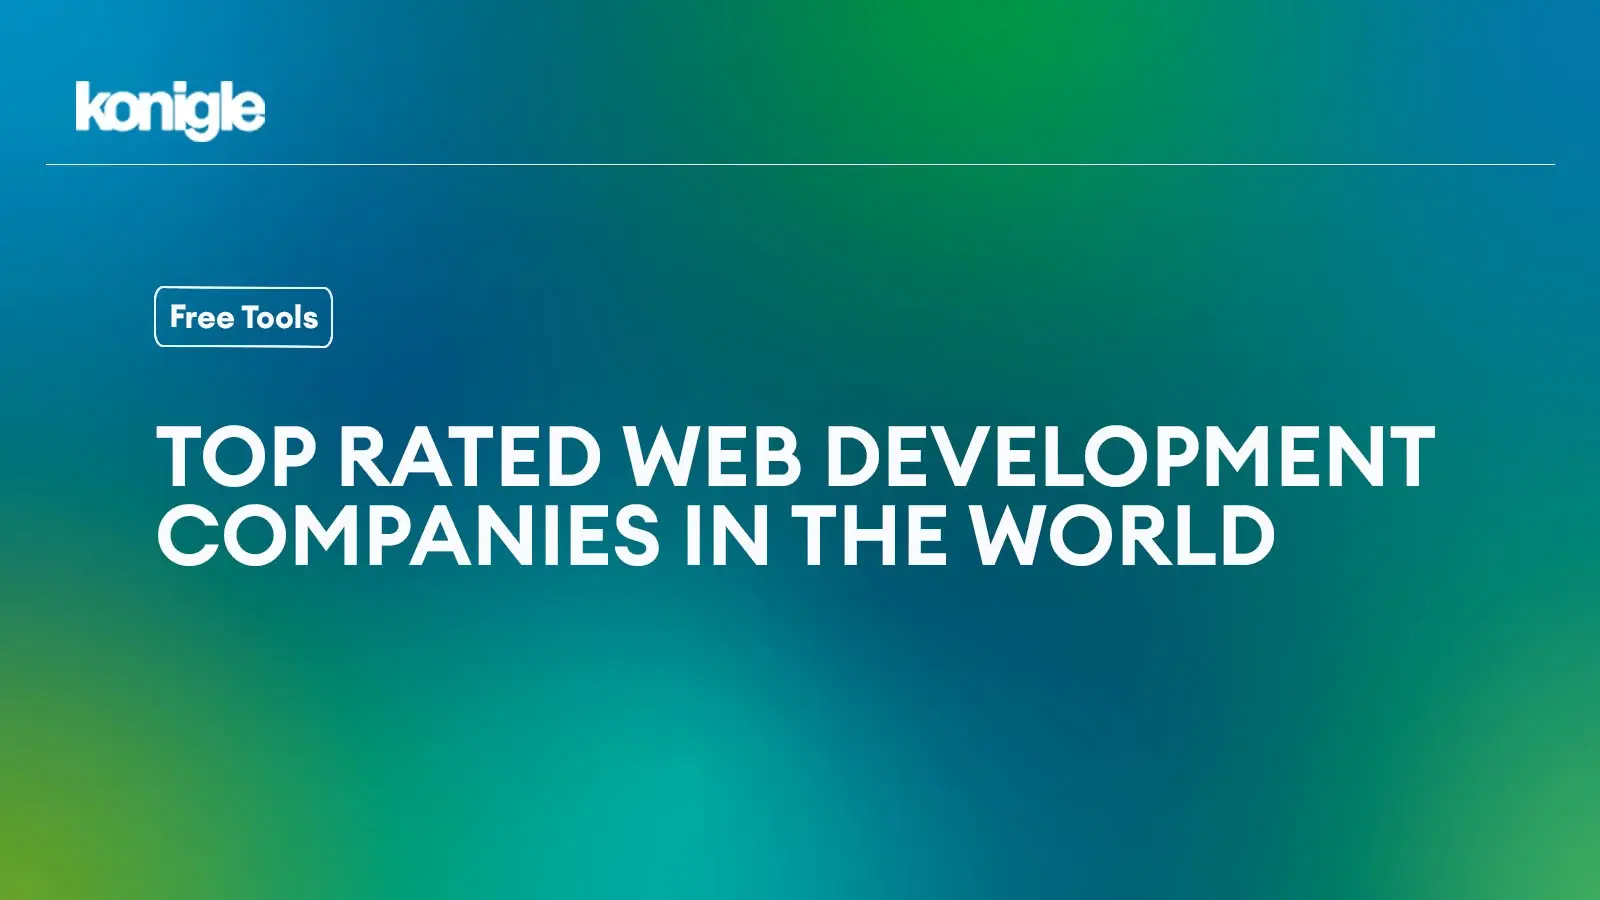 Top Web Development Companies